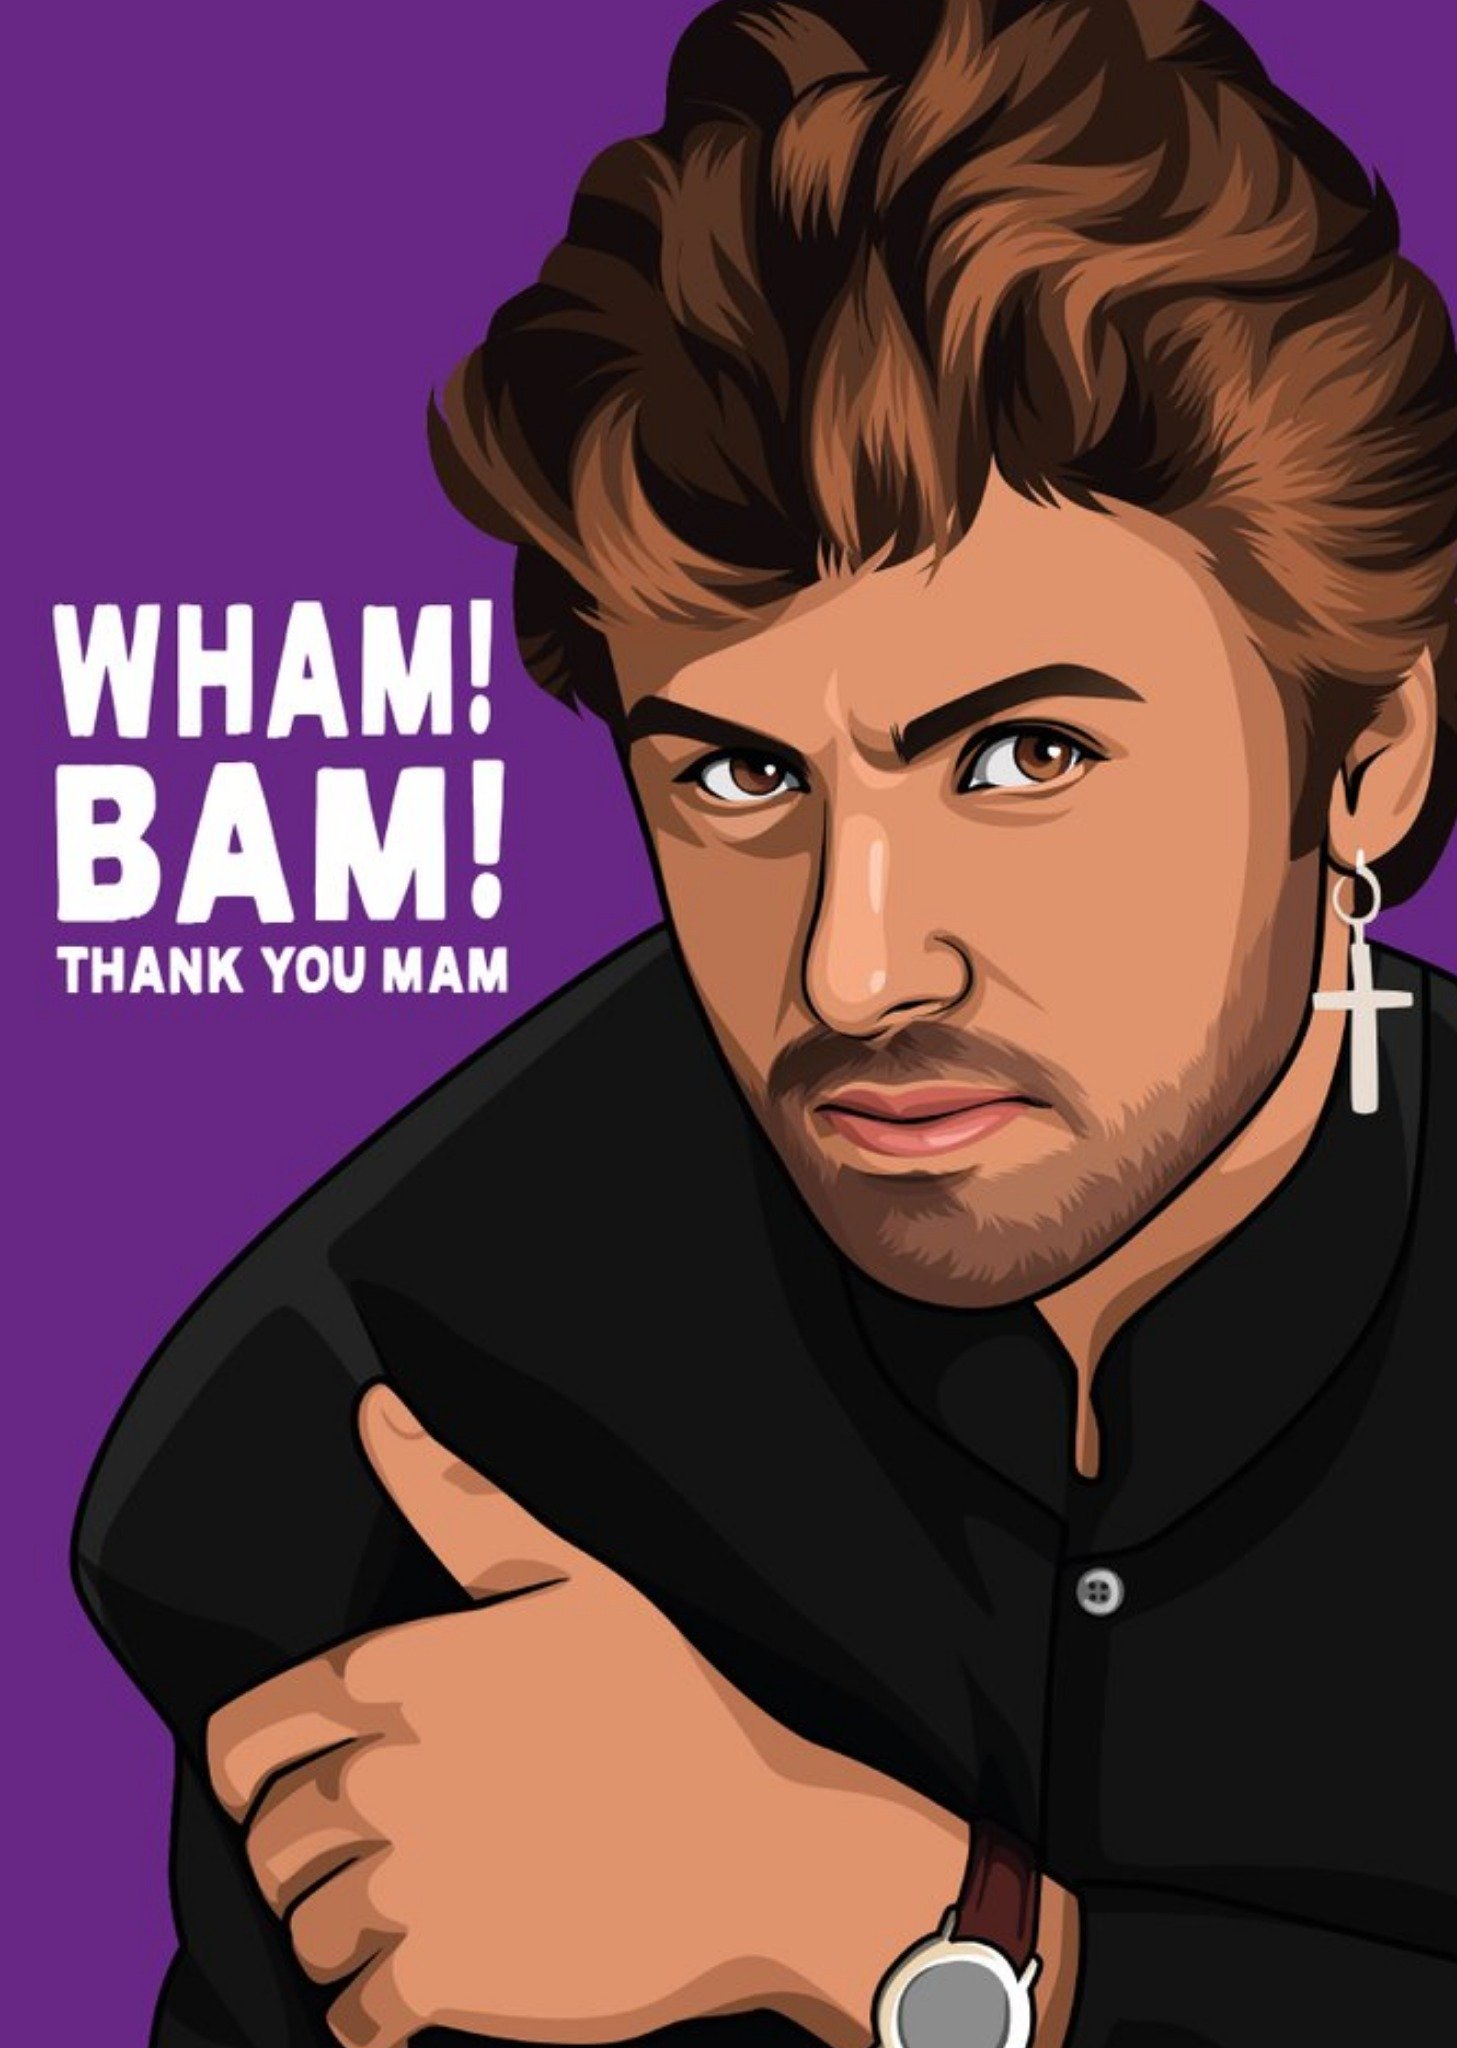 All Things Banter Bam Thank Your Mam Music Spoof Card Ecard